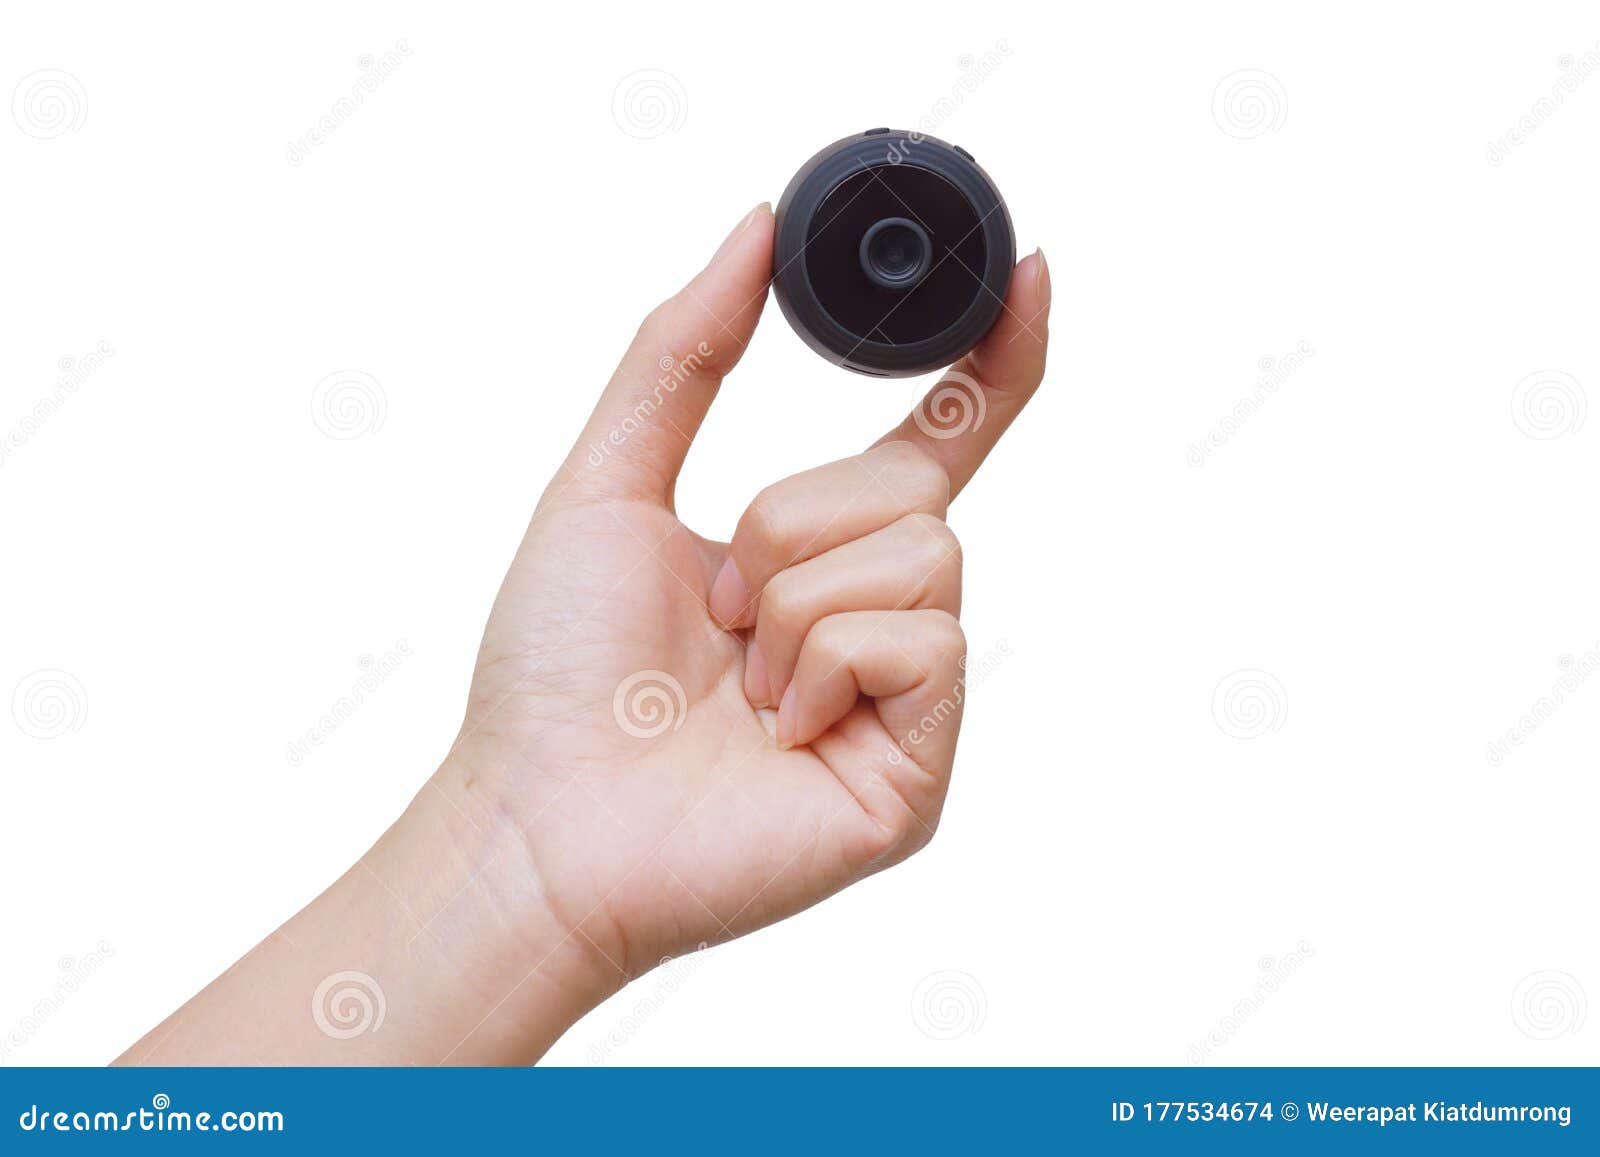 female hand holding a spy camera